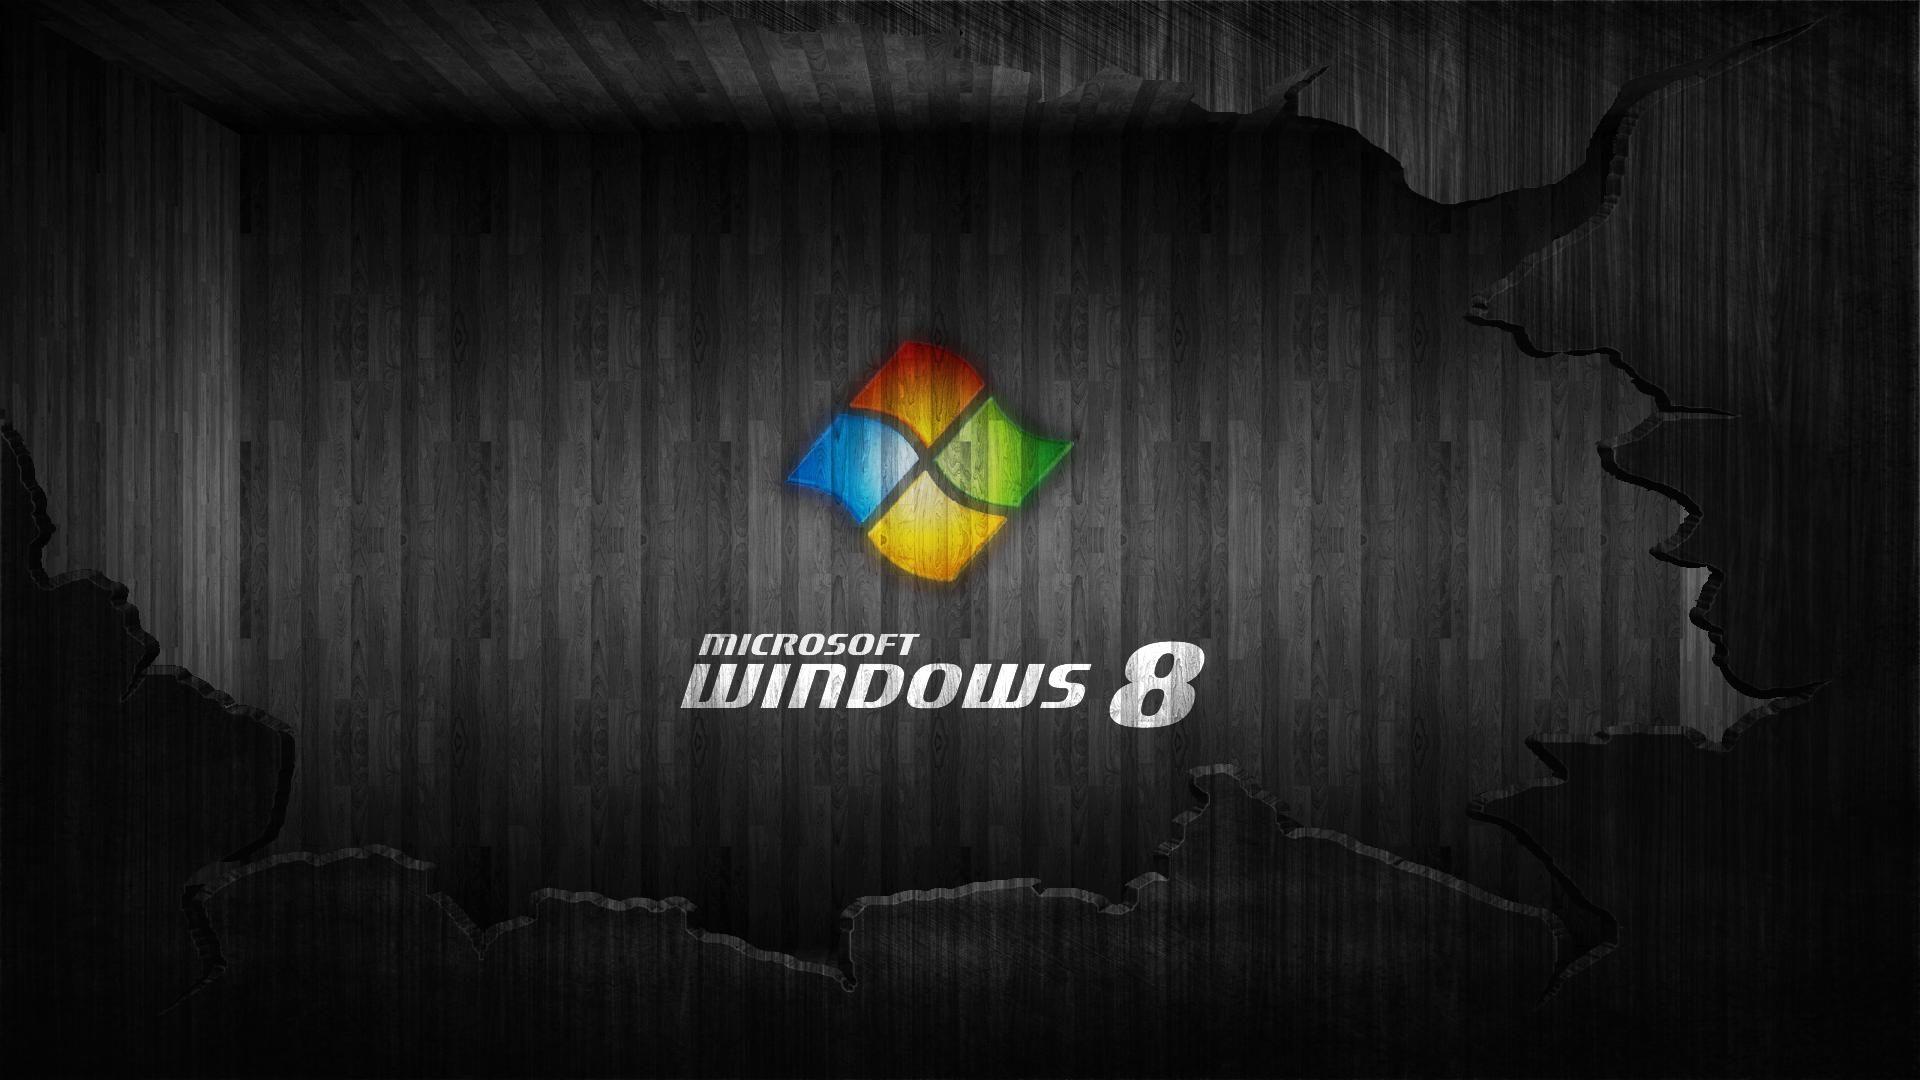 Windows 8 logo wallpaper 595918